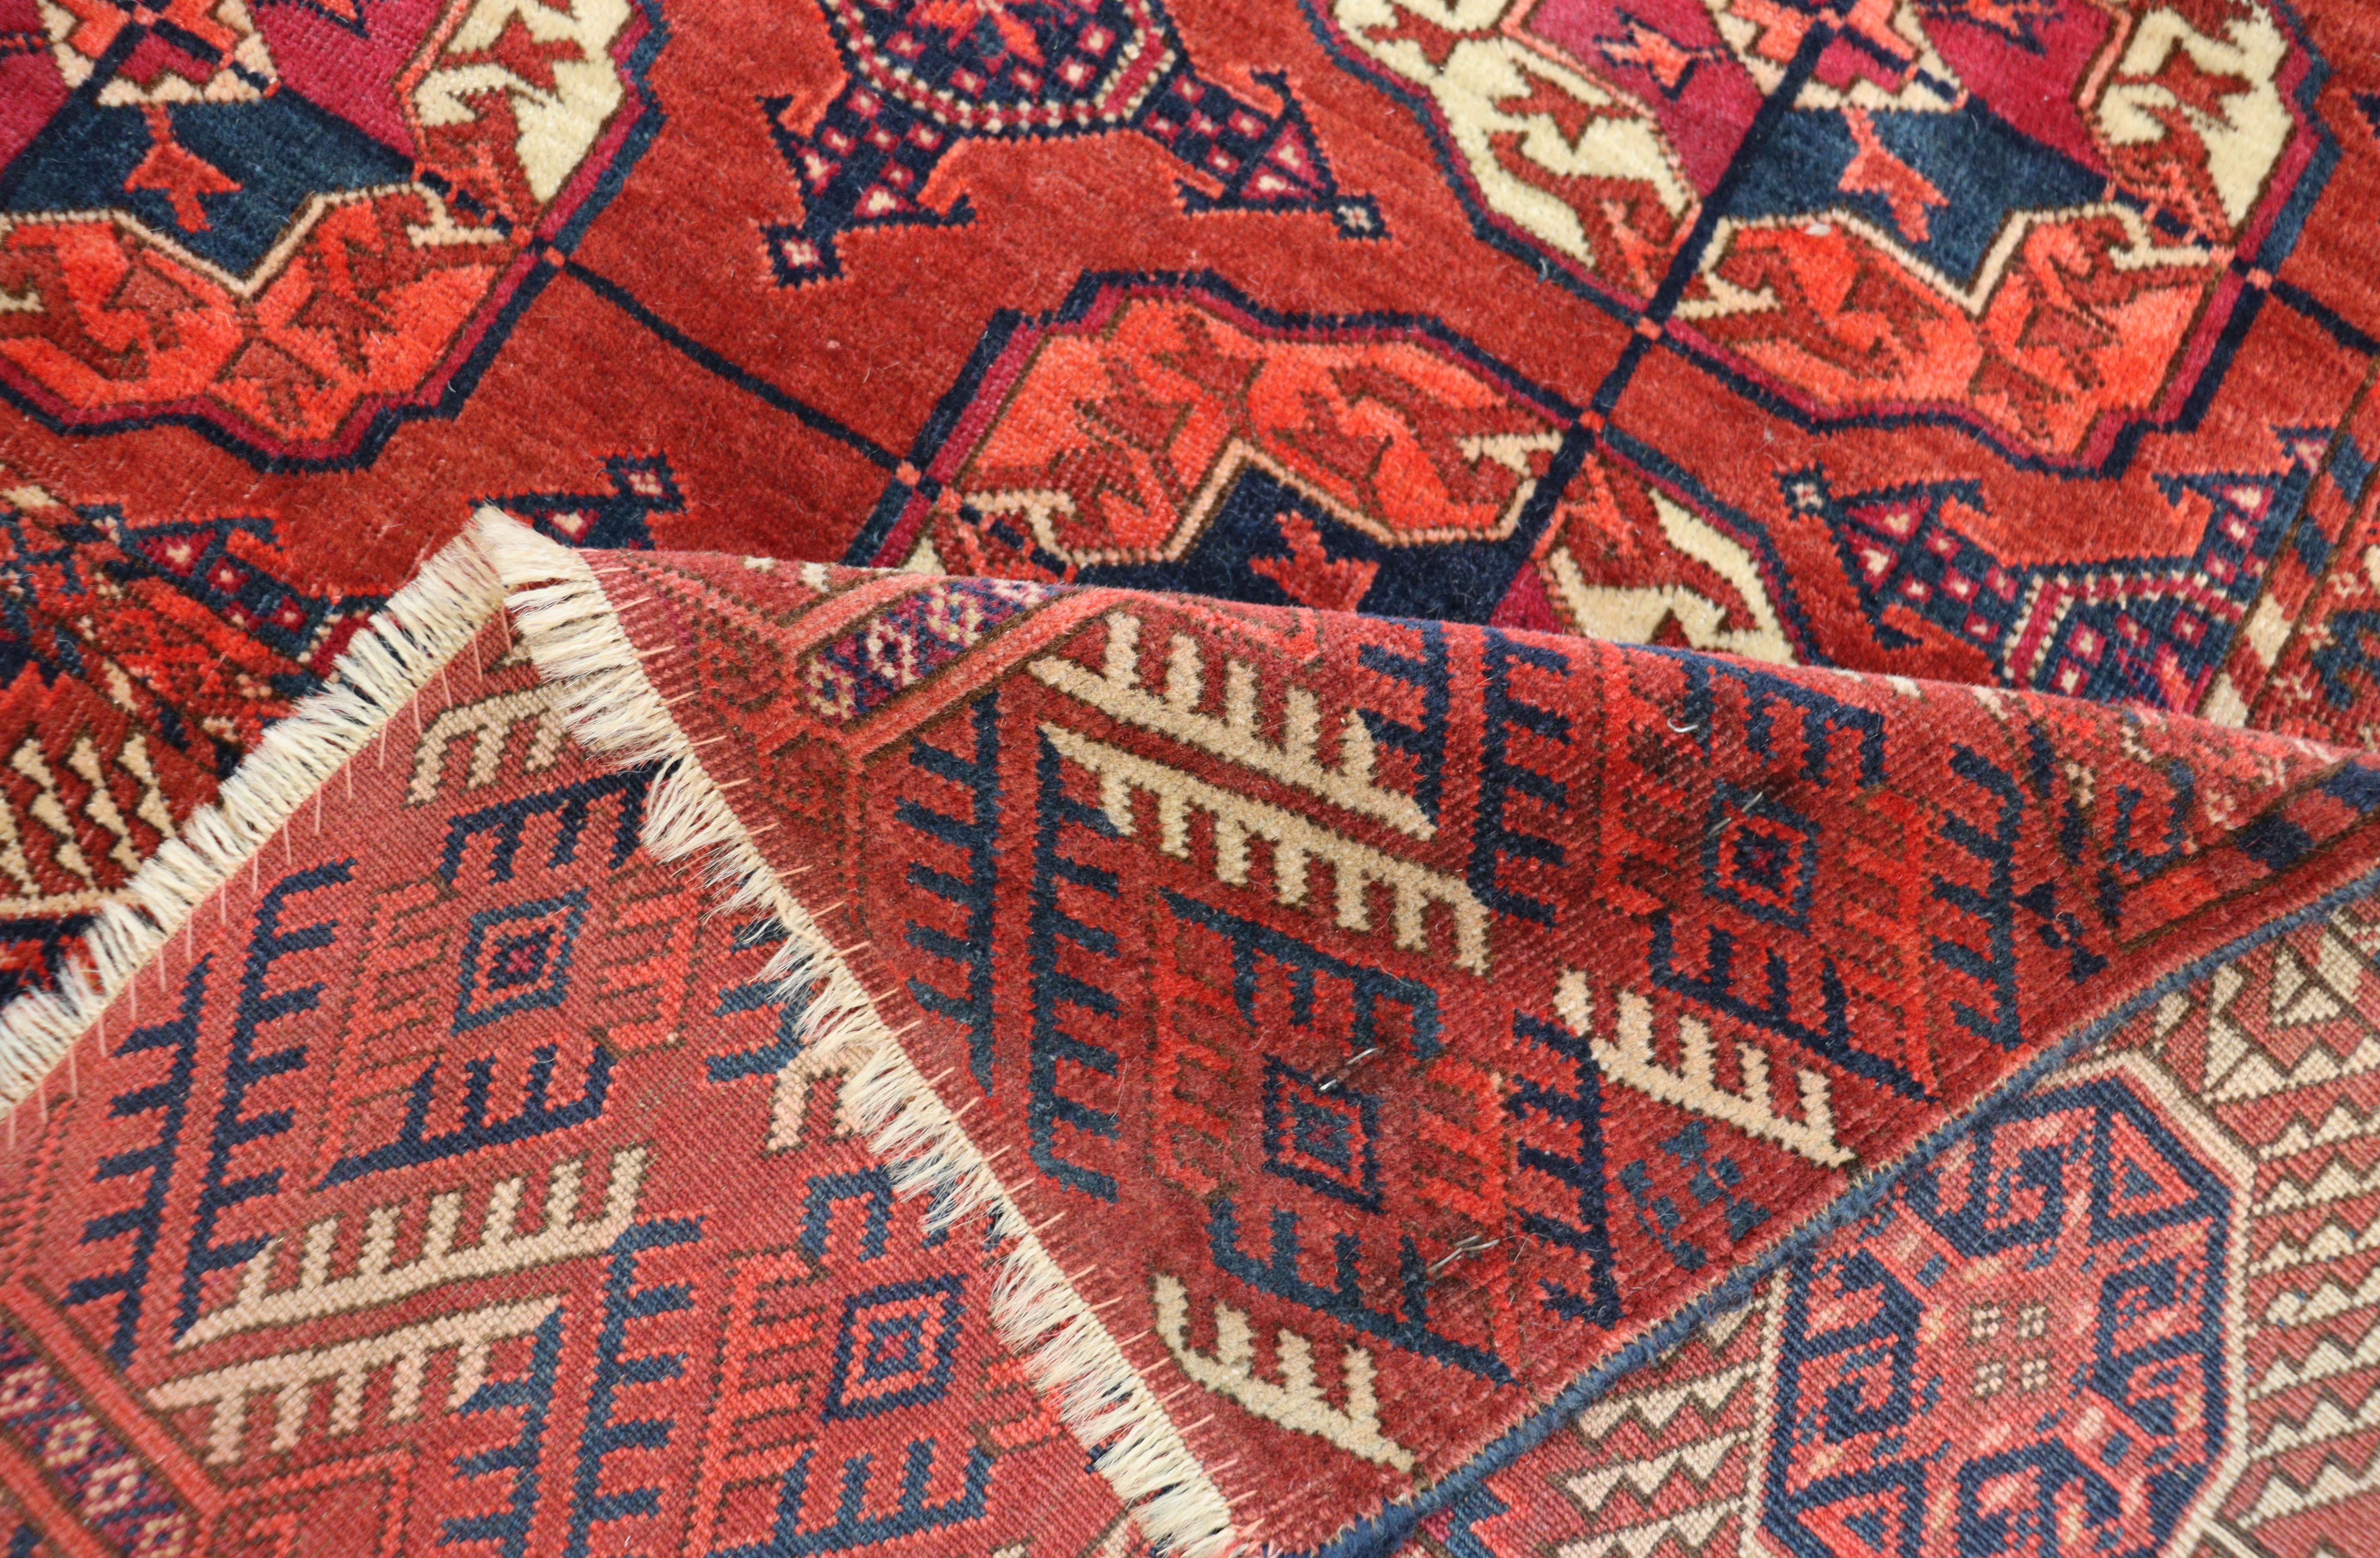 Central Asian Antique Turkoman Tekke Main Carpet, 7'6